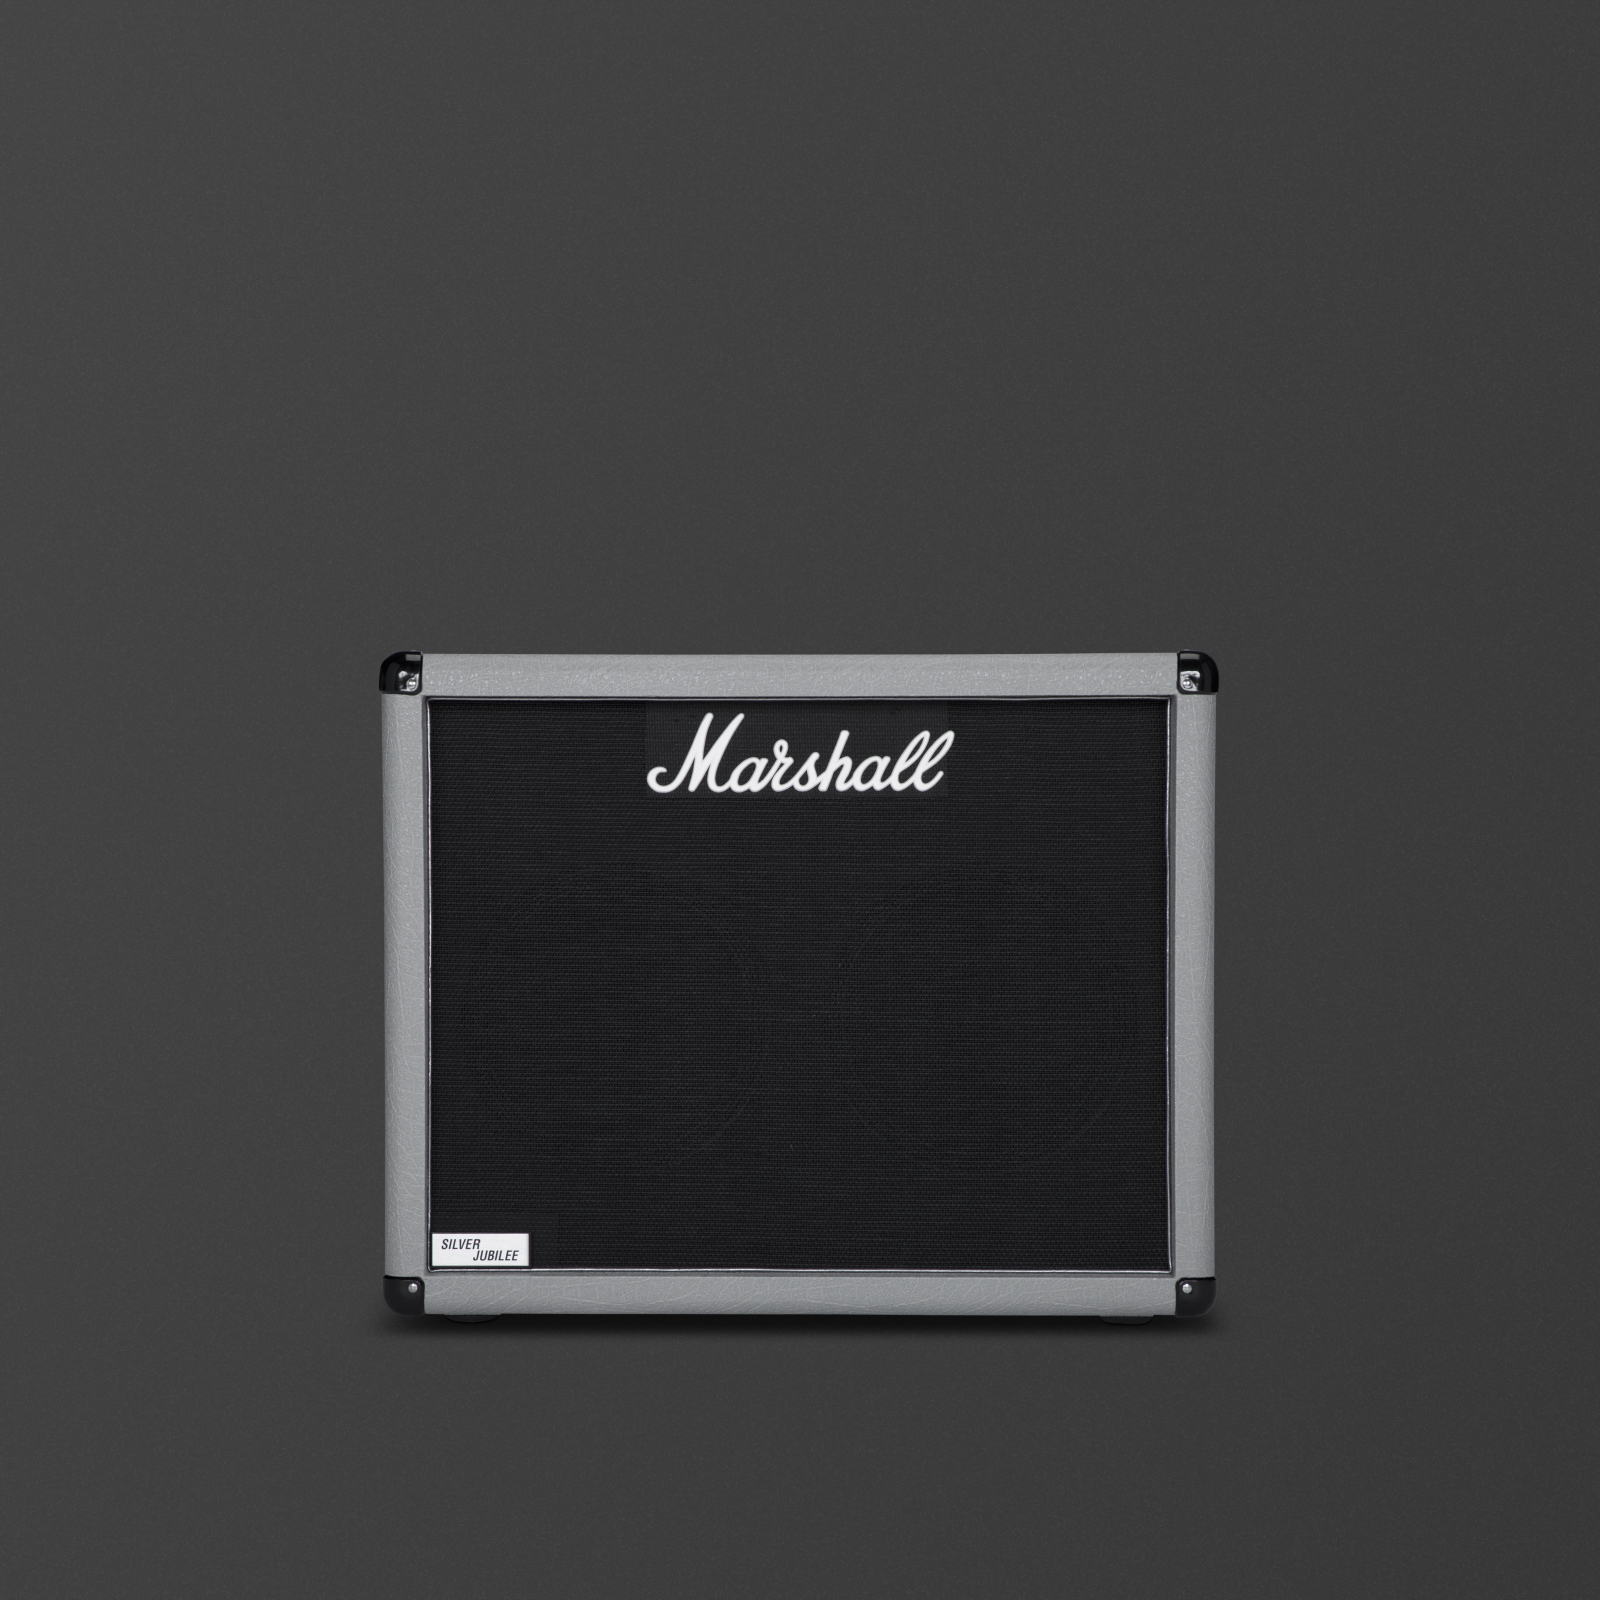 Marshall's 2536 schwarz-silberne Box.  